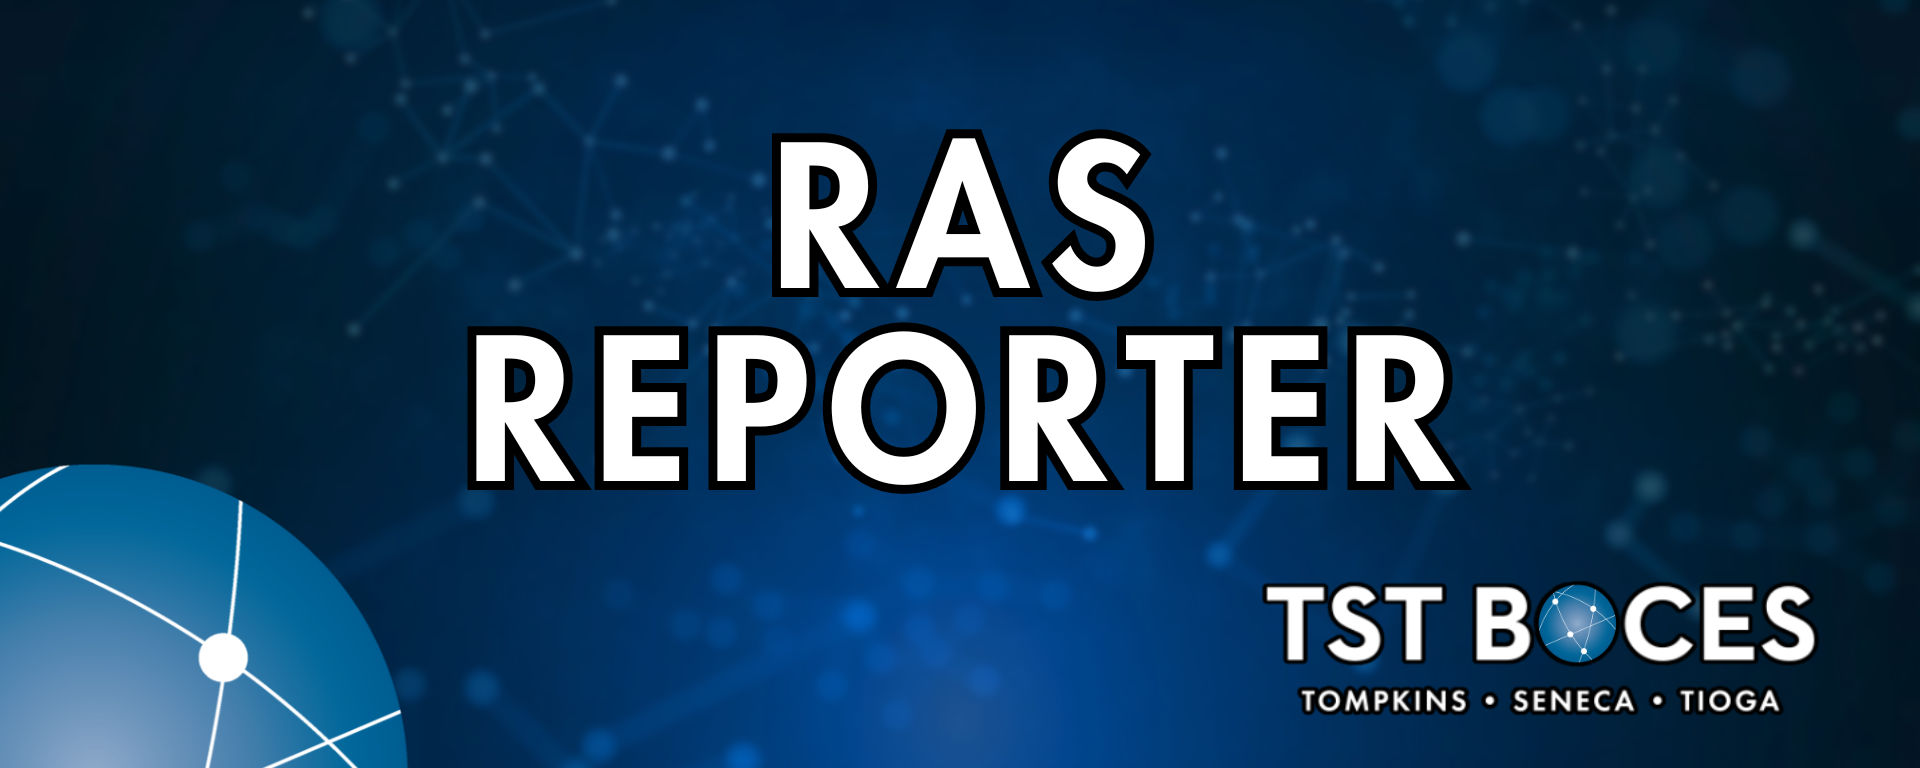 RAS Reporter banner